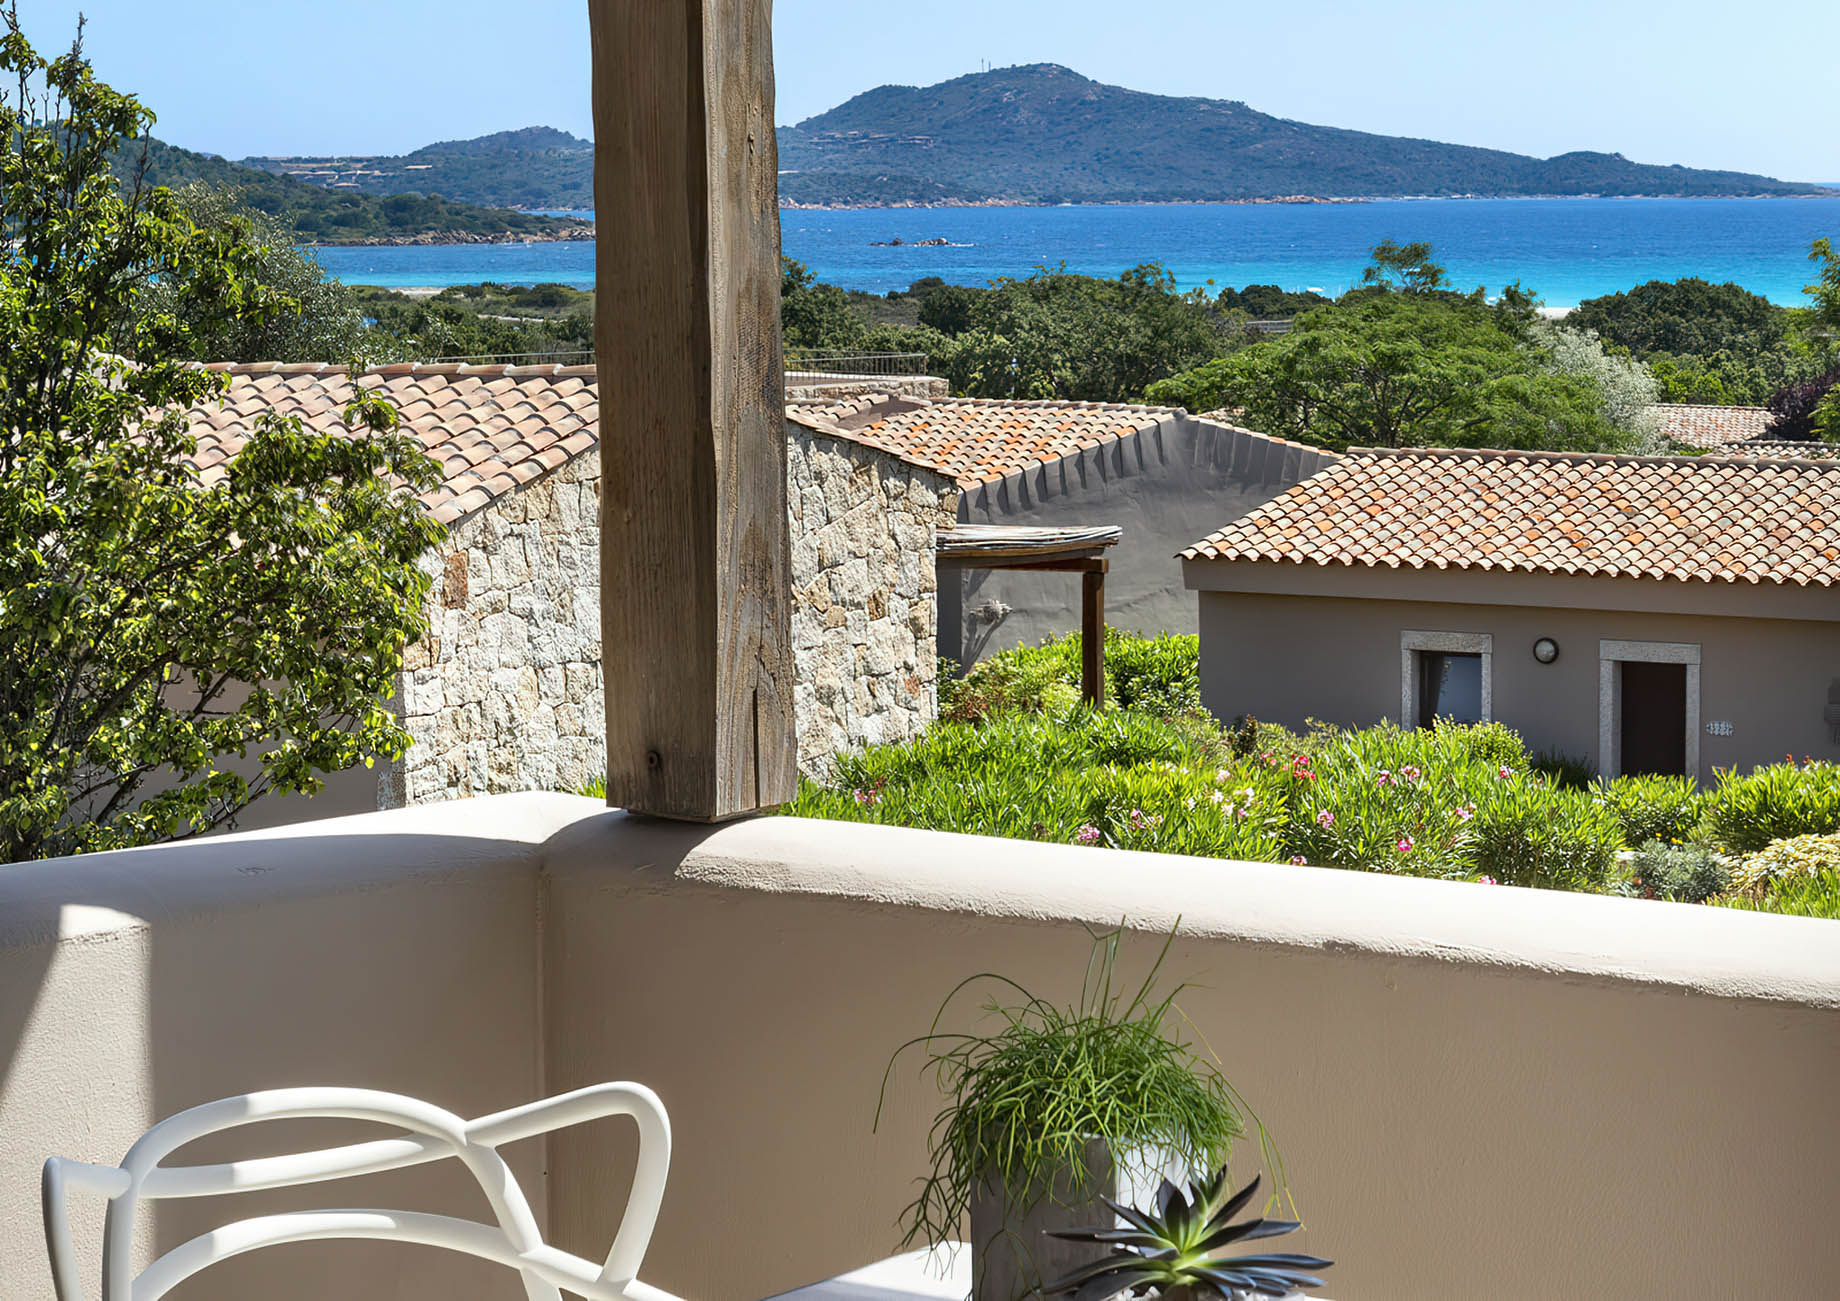 Baglioni Resort Sardinia - San Teodoro, Sardegna, Italy - Junior Suite Sea View